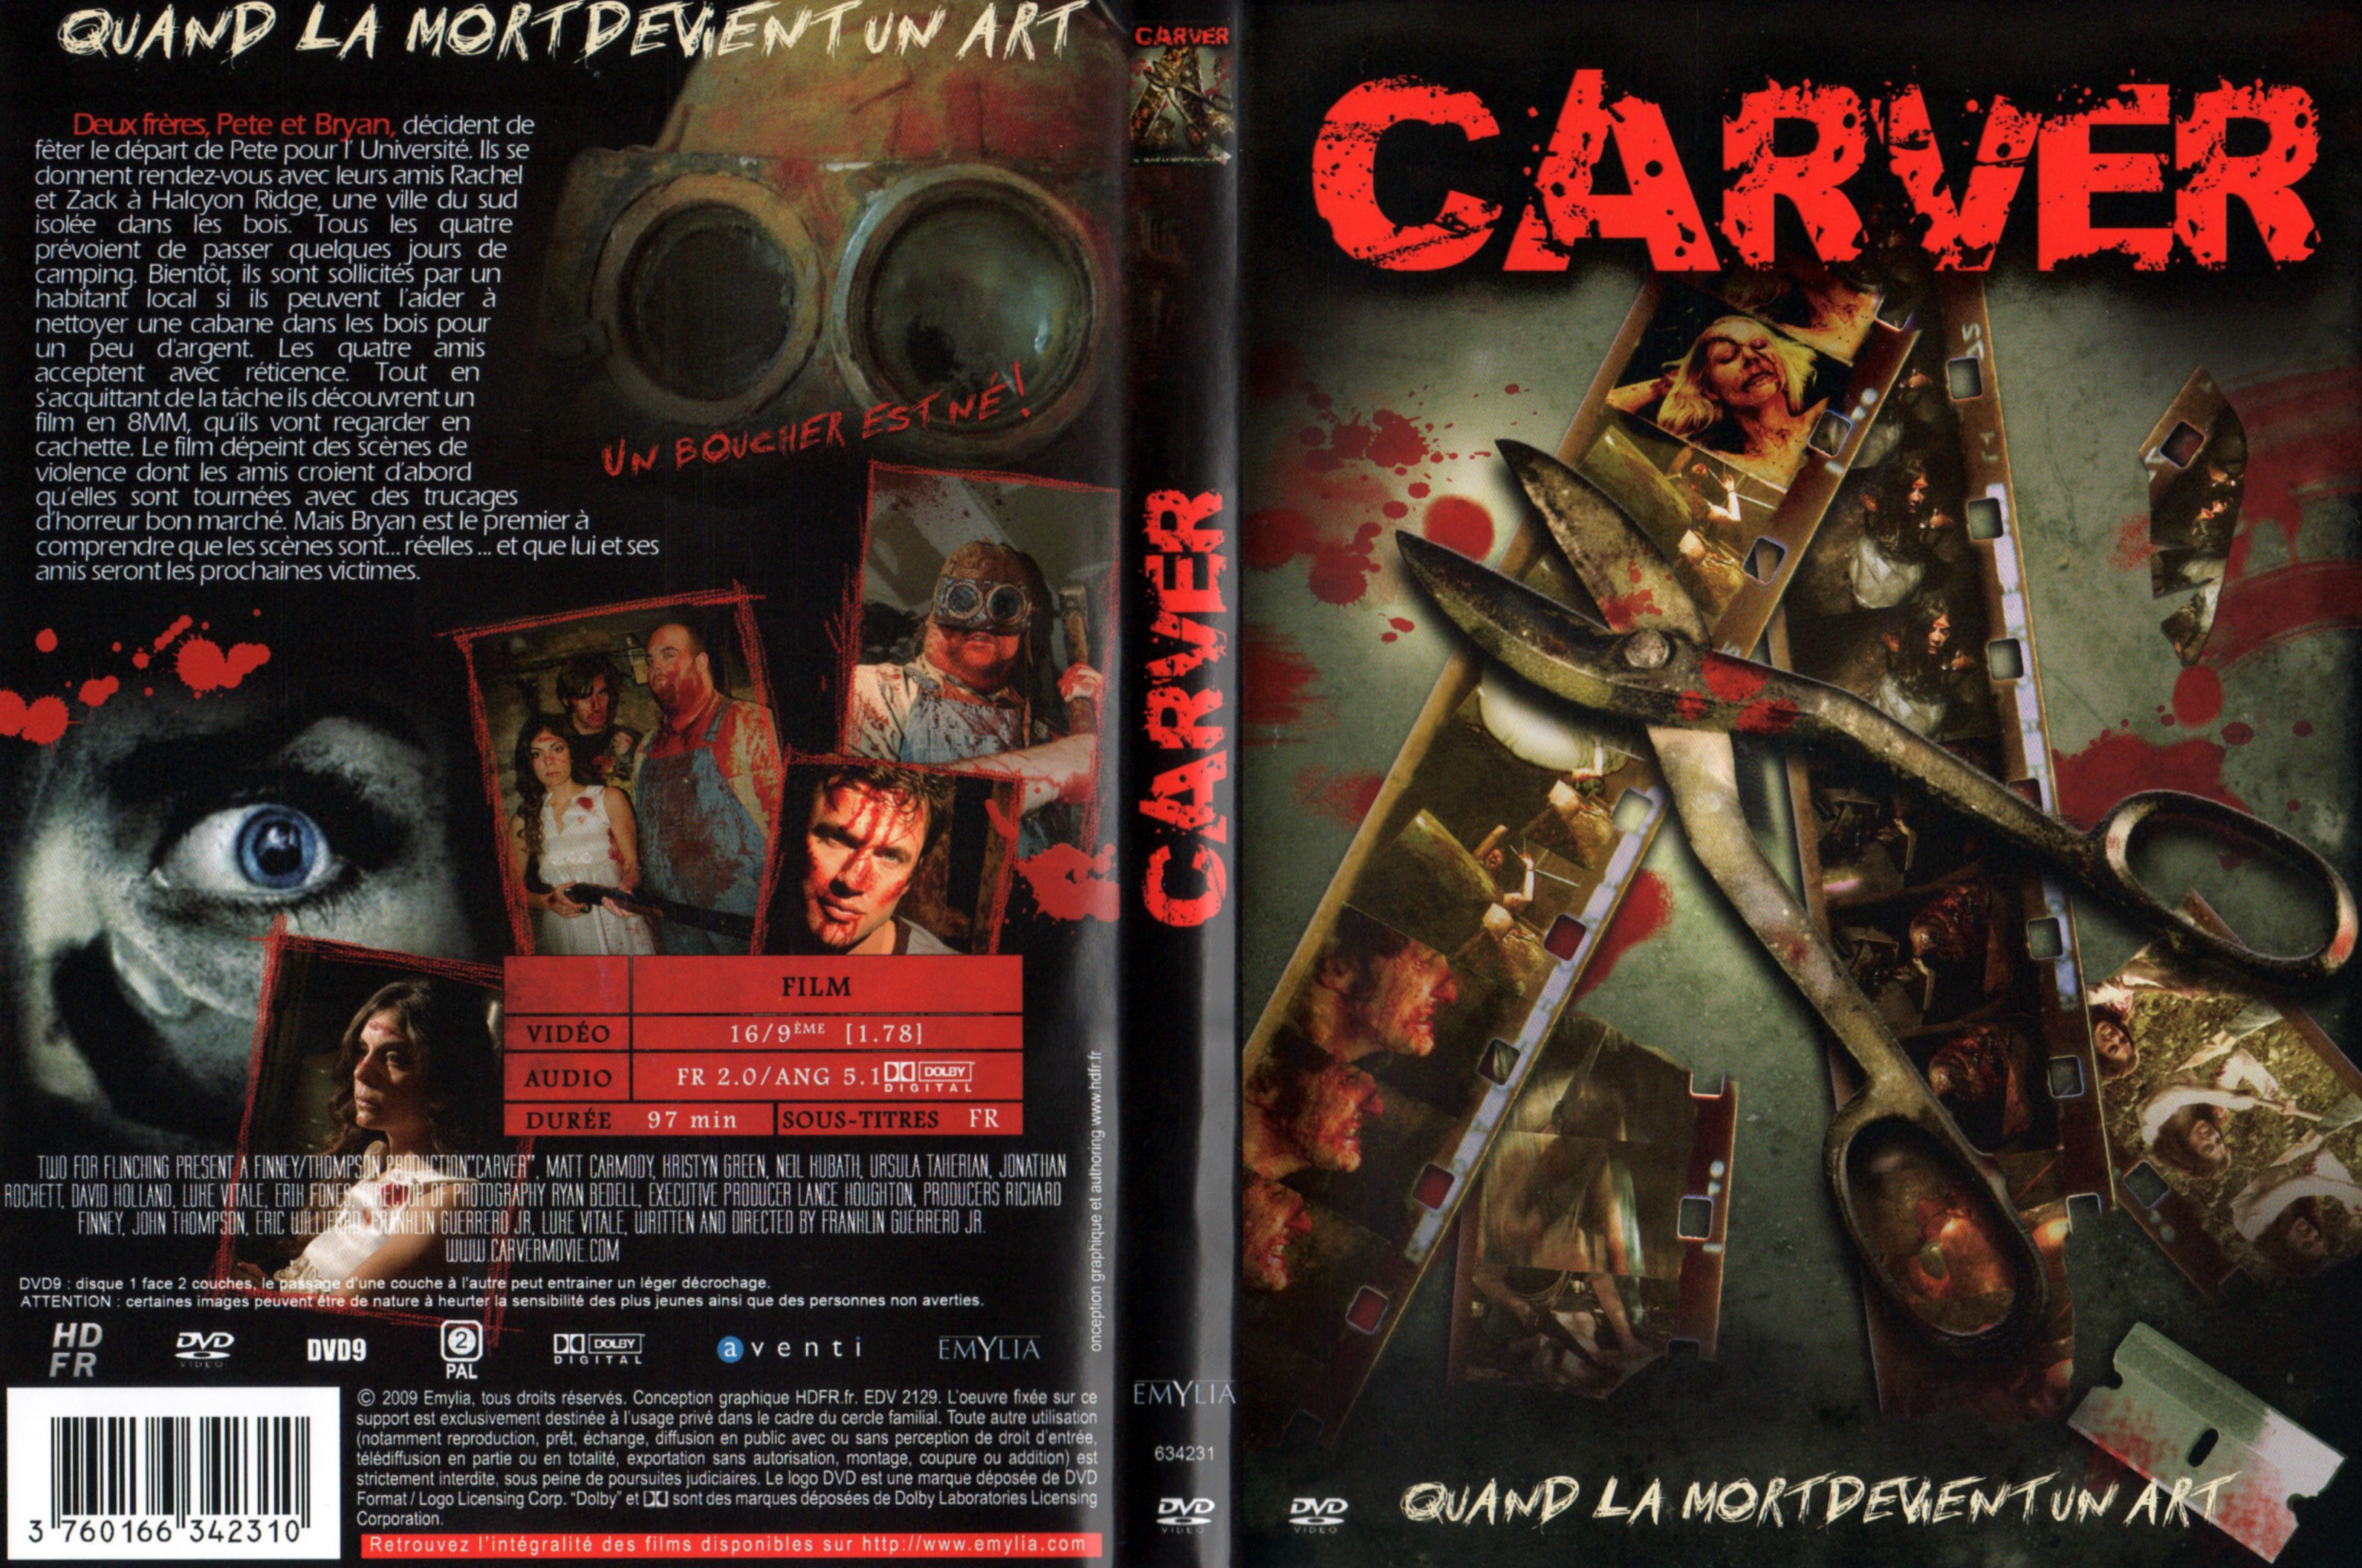 Jaquette DVD Carver